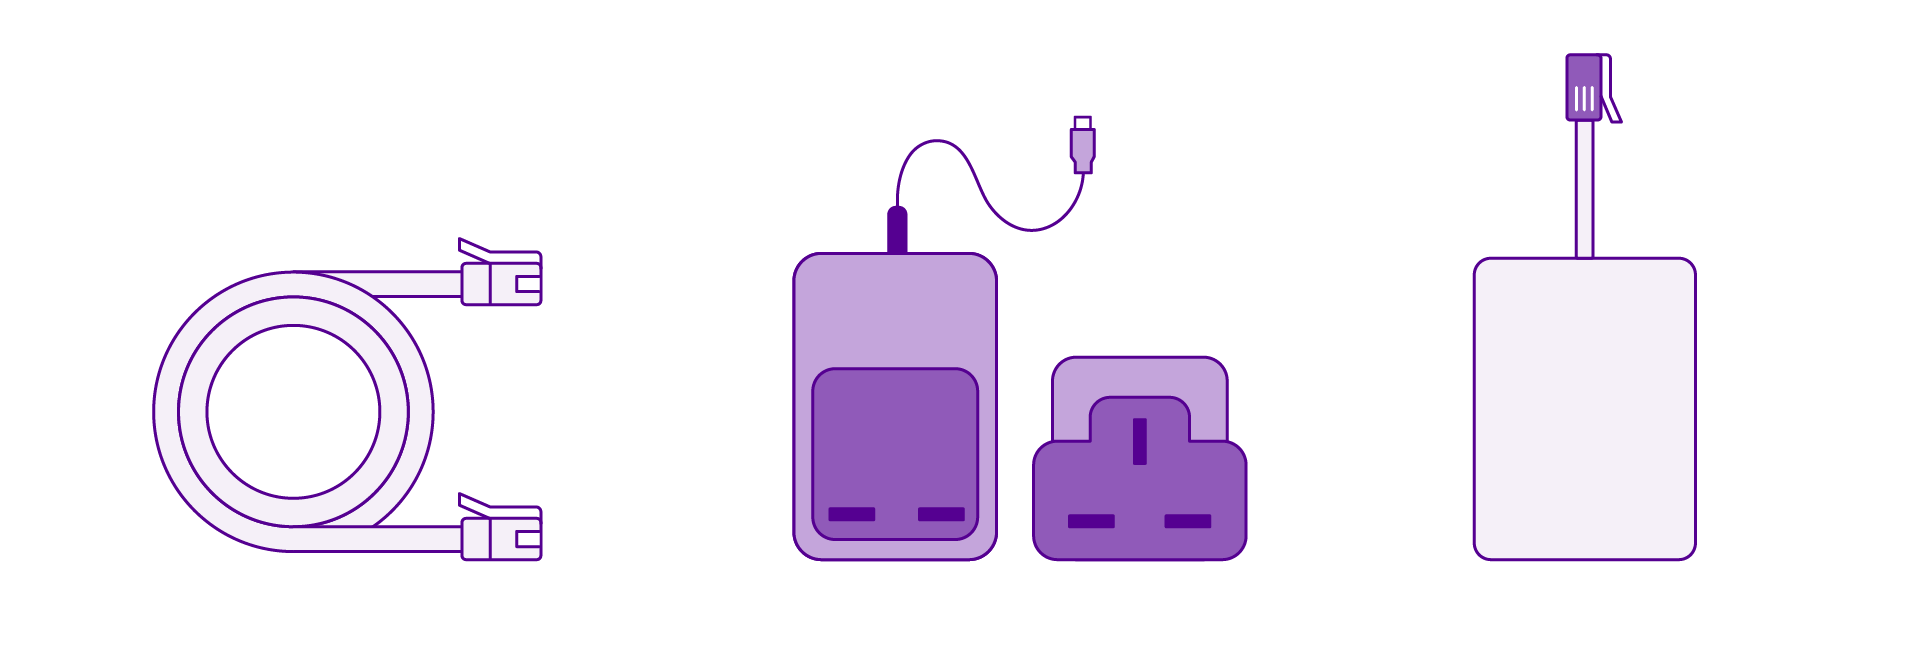 Value router equipment illustration